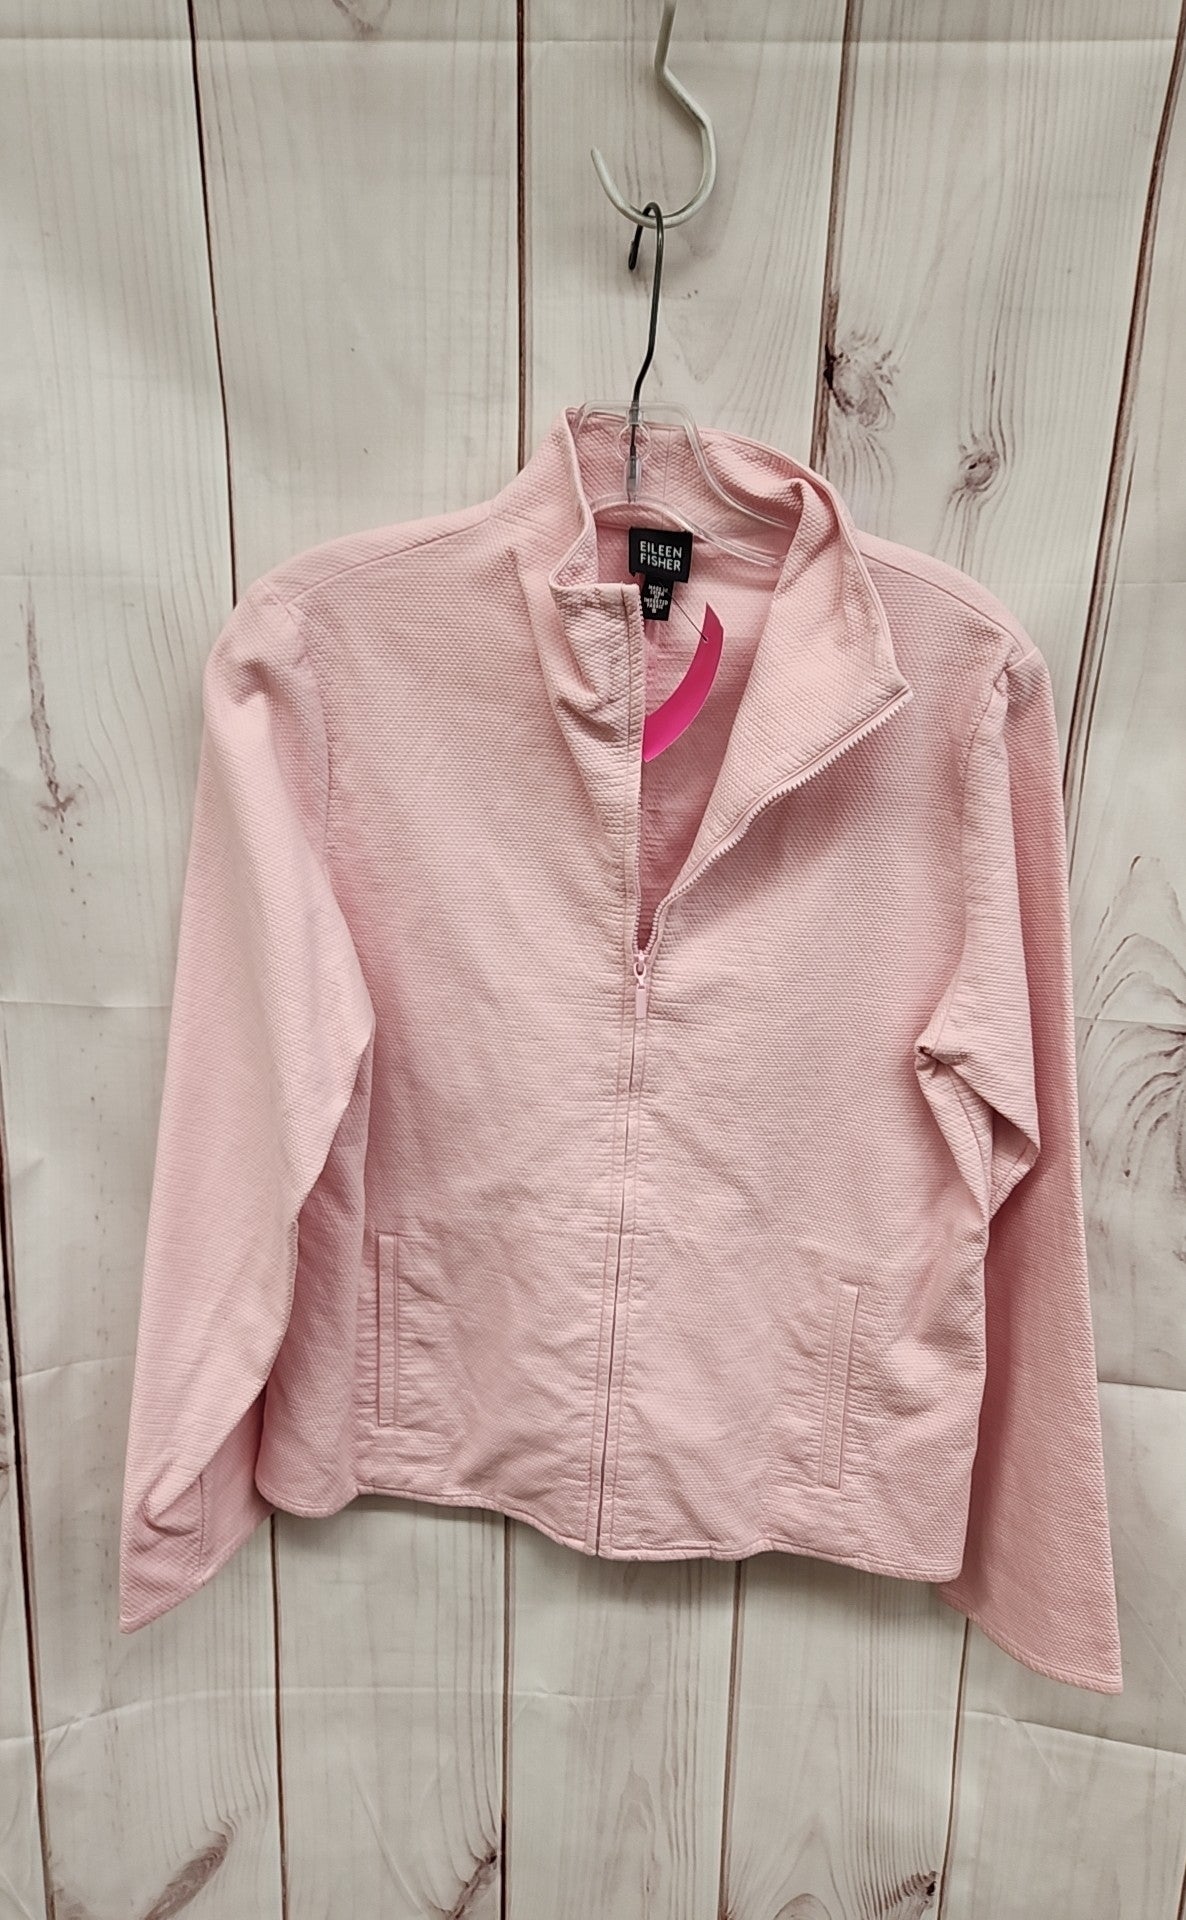 Eileen Fisher Women's Size S Pink Jacket